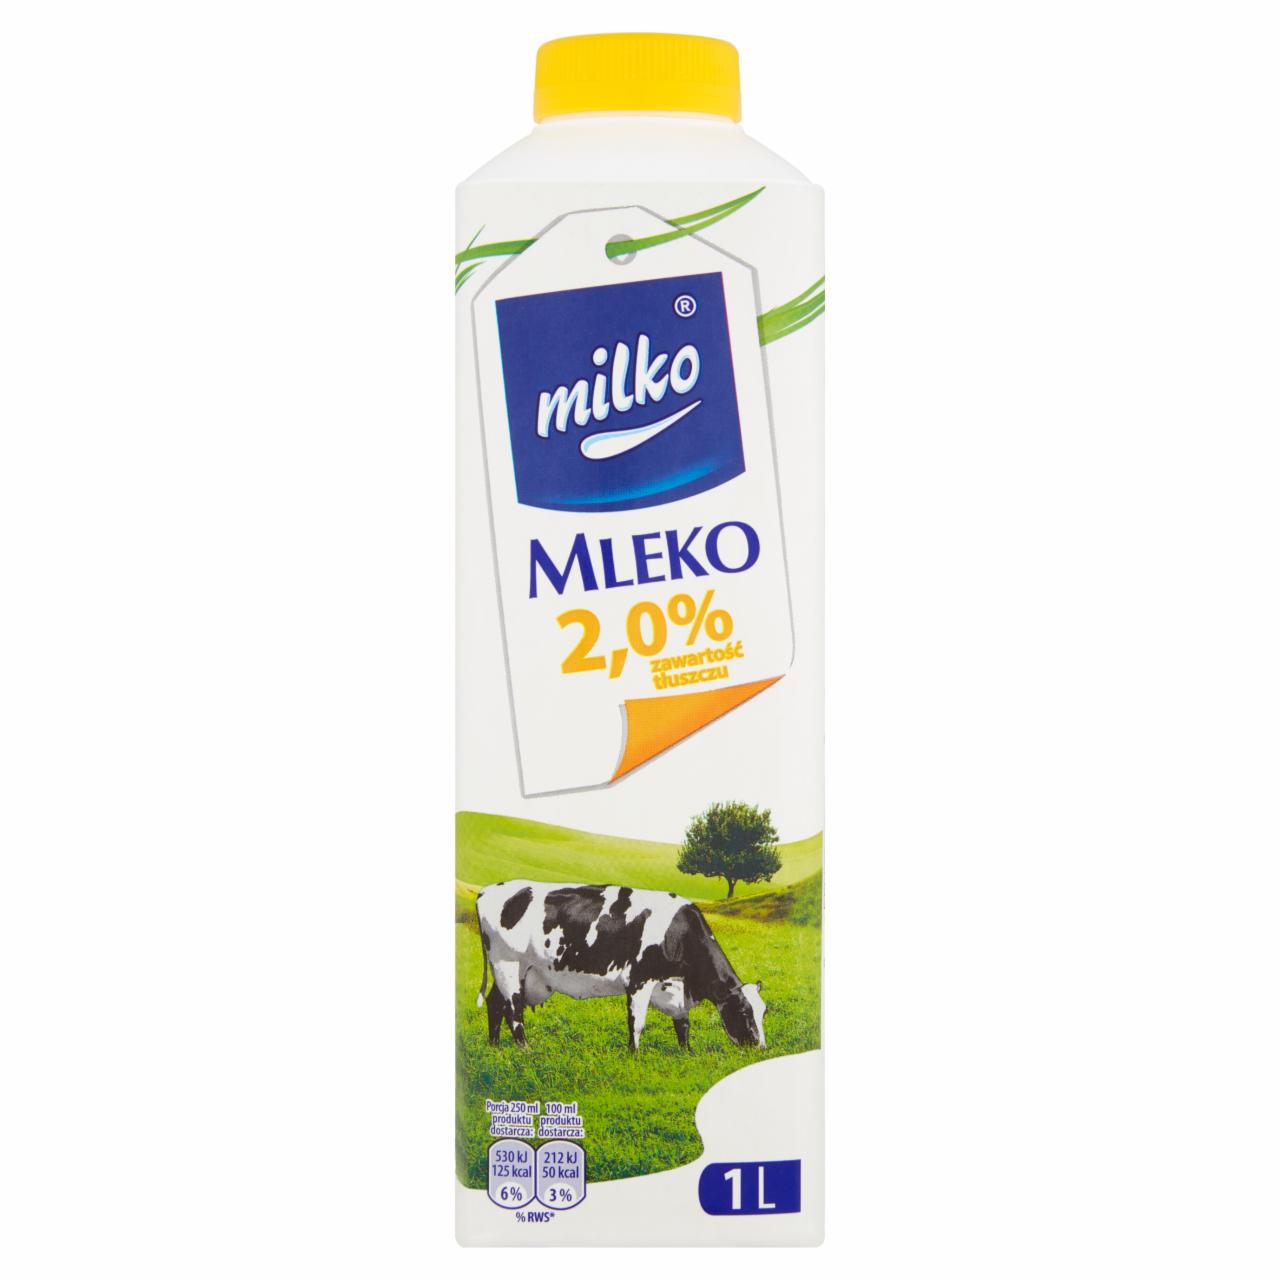 Zdjęcia - Milko Mleko 2,0% 1 l